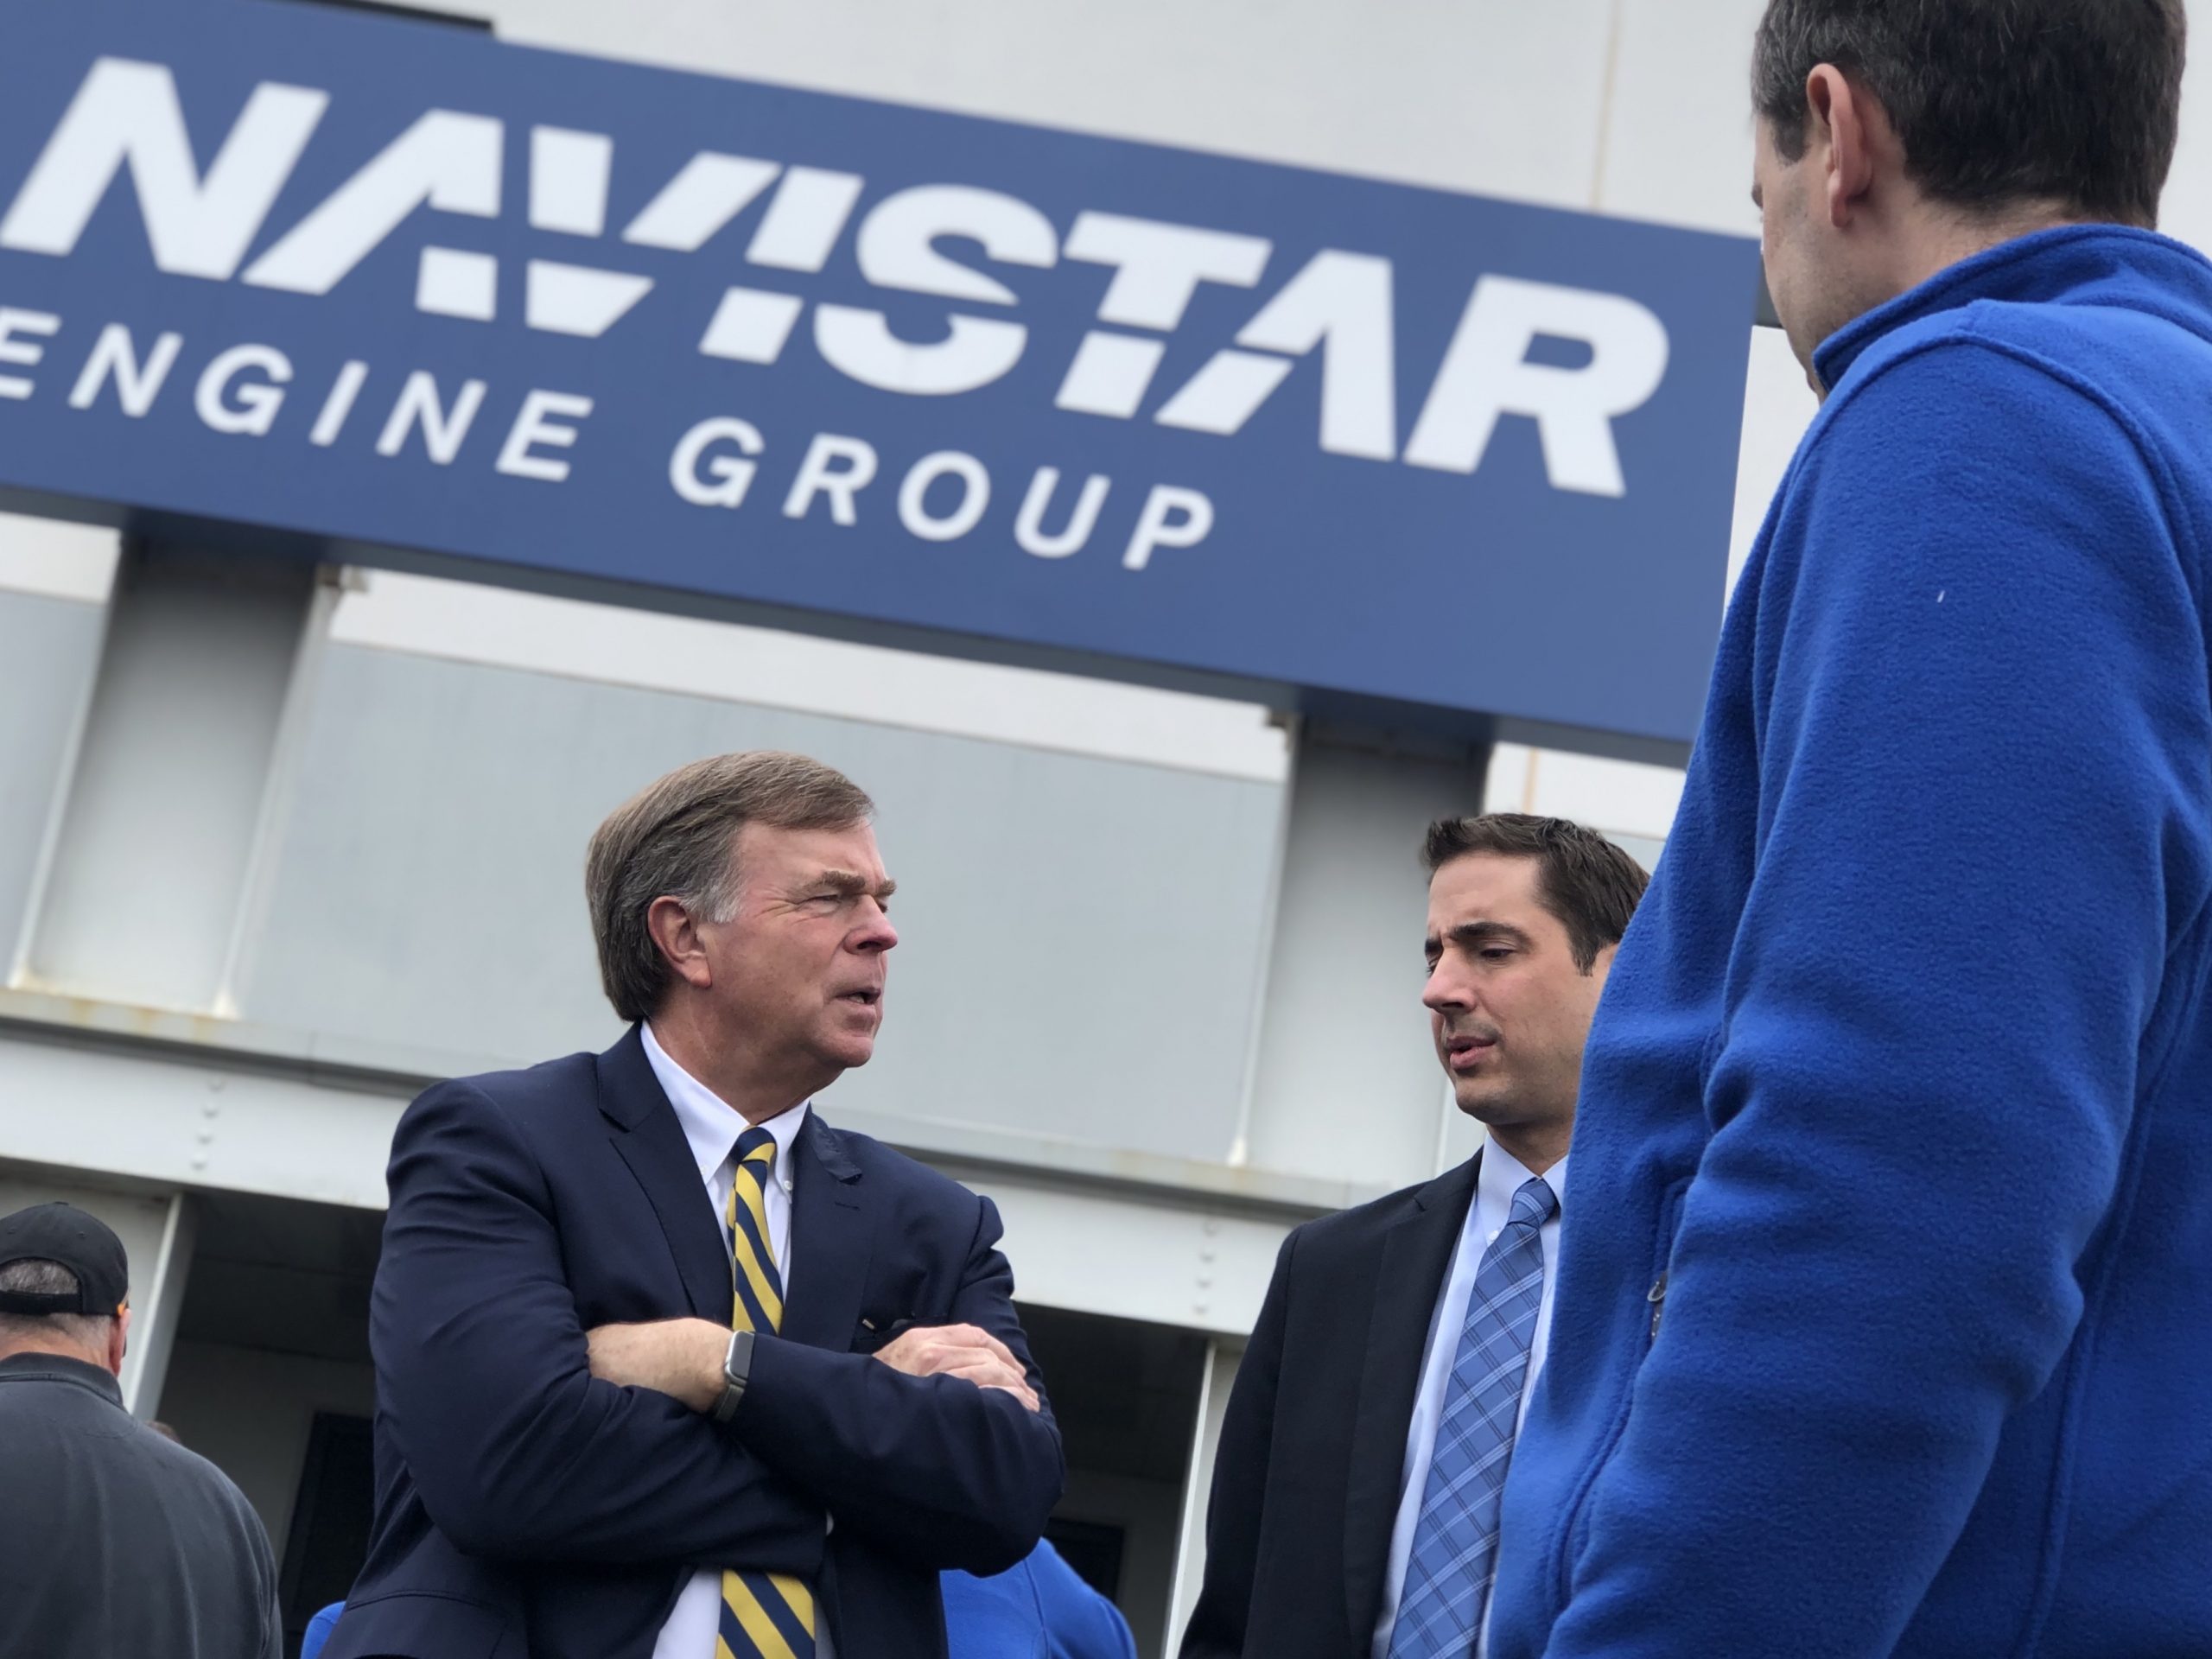 Mayor Battle visits with Navistar corporate leaders at their groundbreaking